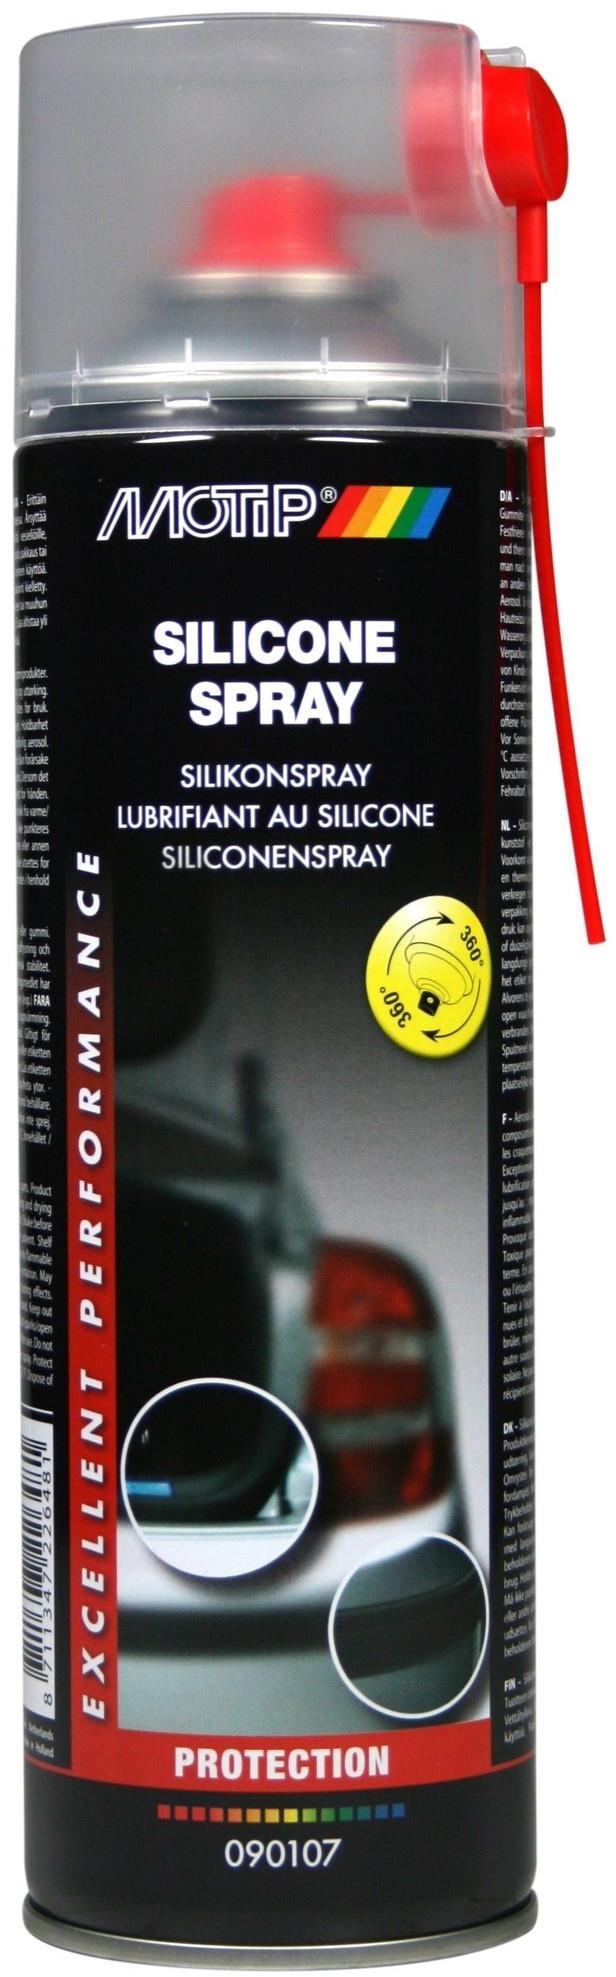 Silicone Motip spray 500ml_4301.jpg